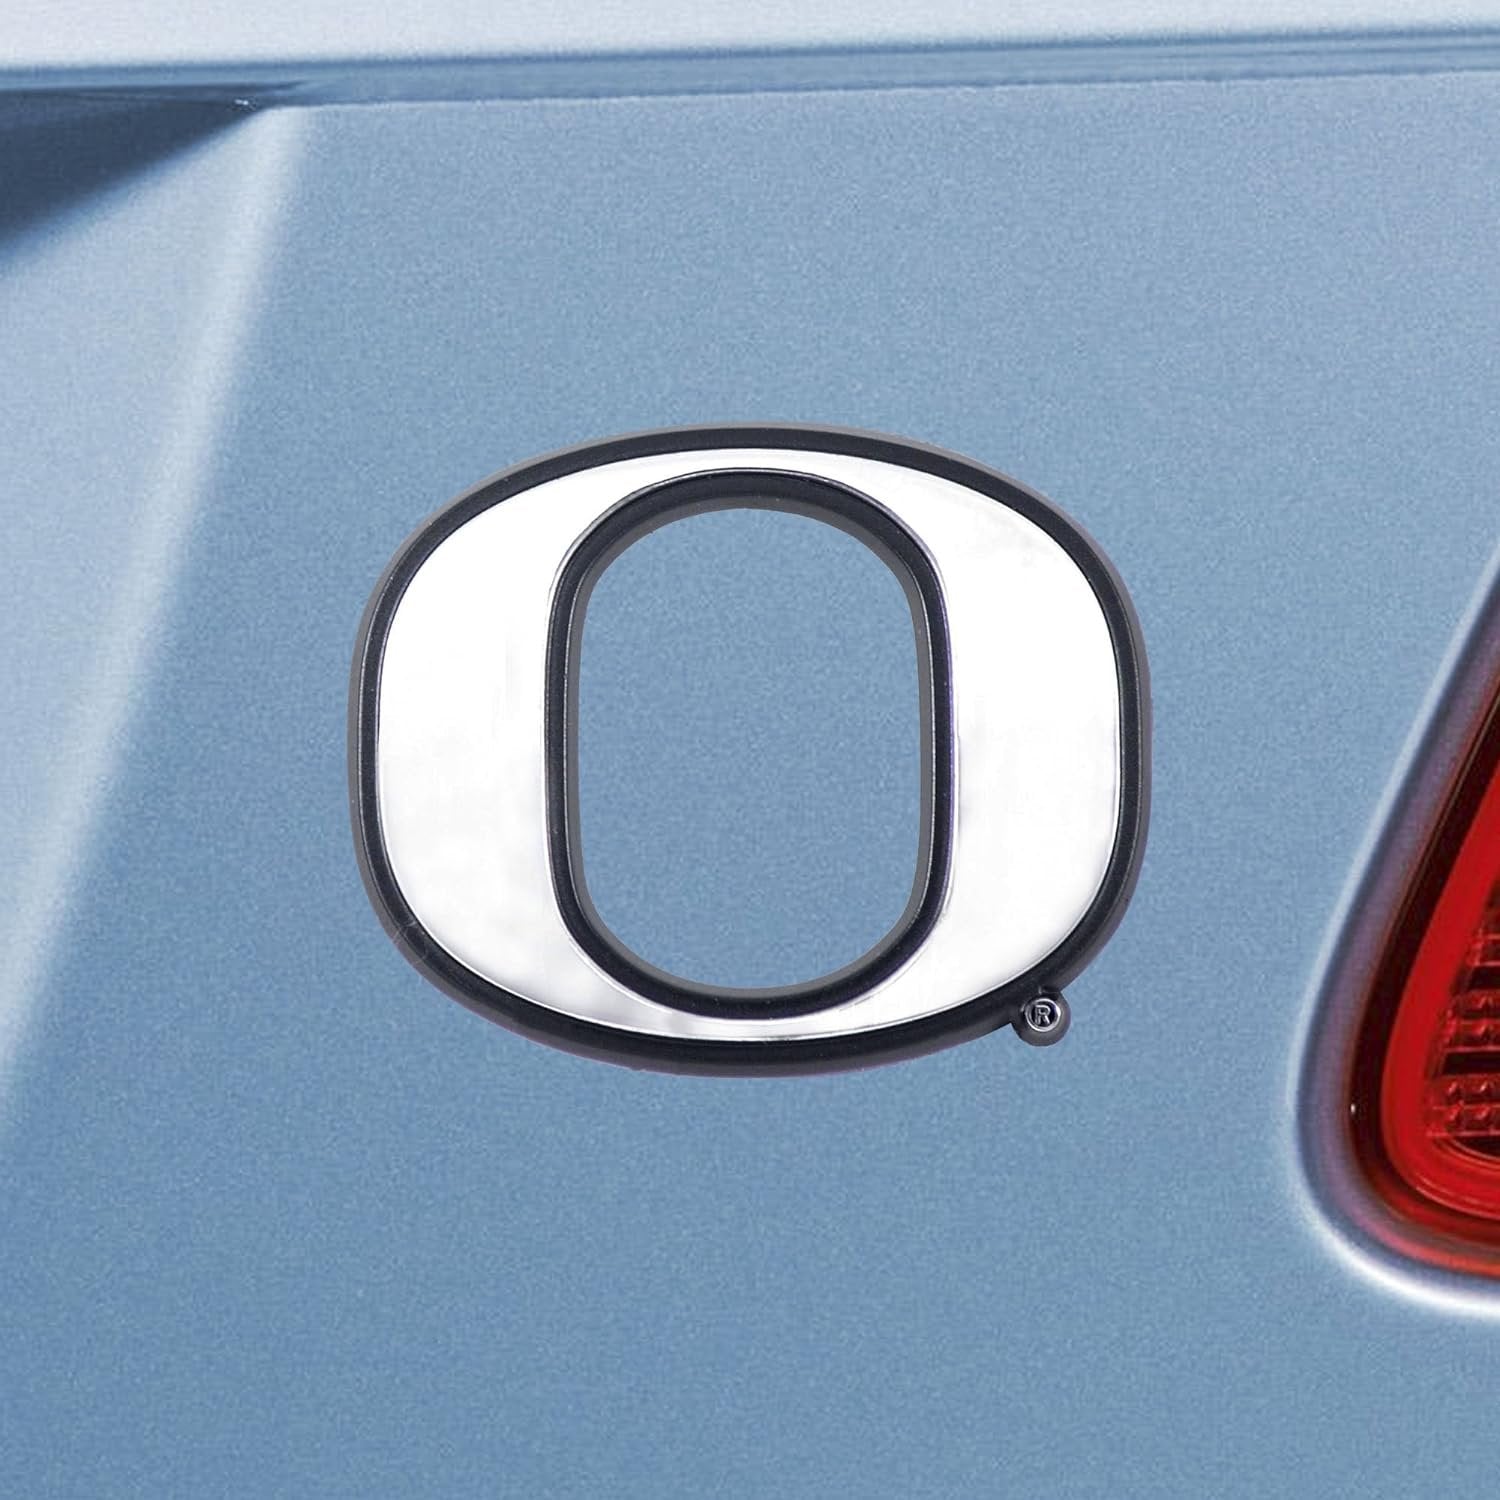 University of Oregon Ducks Solid Metal Raised Auto Emblem Decal Adhesive Backing